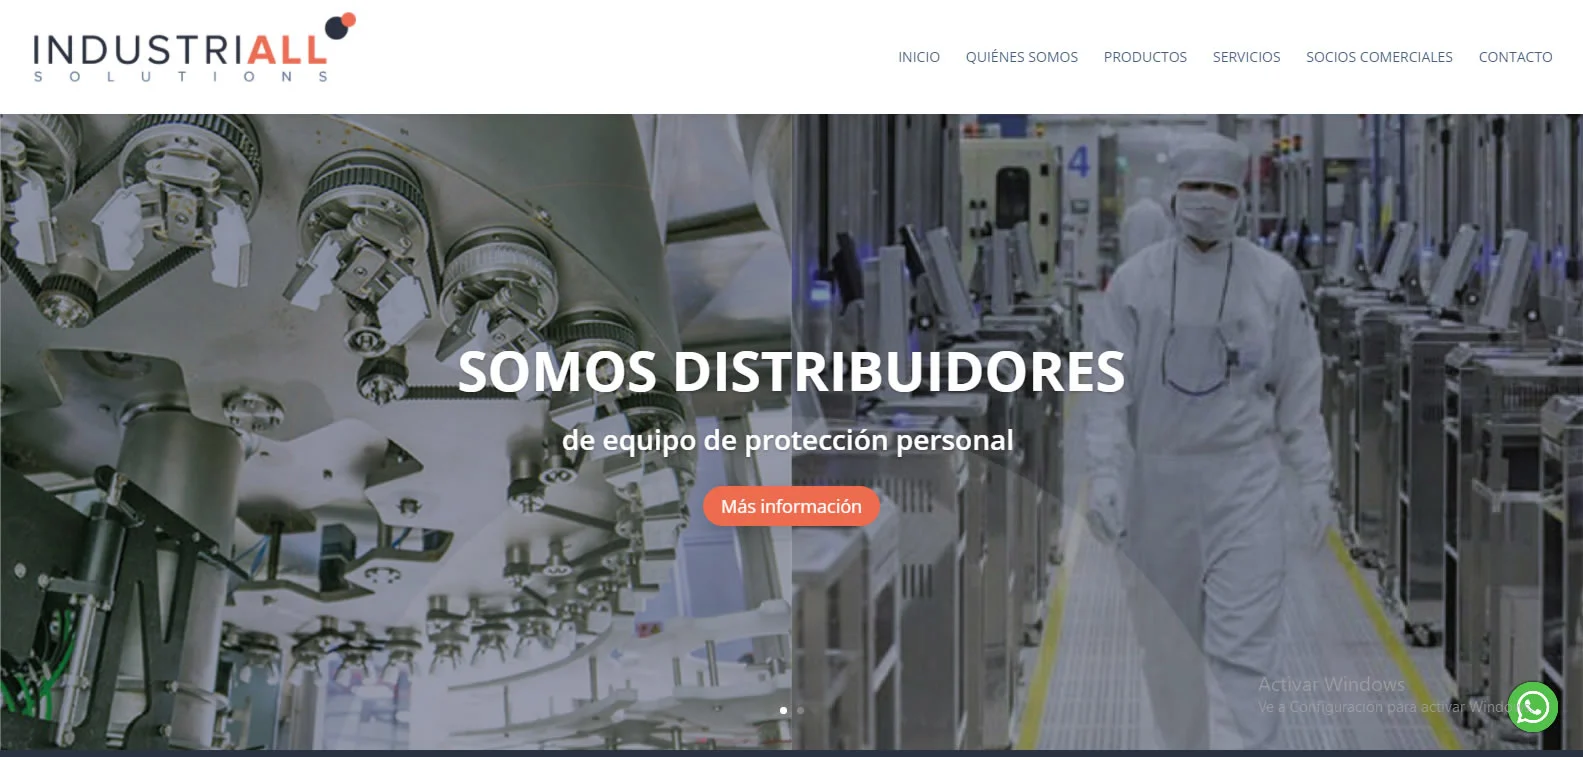 industriallsolutions1-pagina-web-gha-grupohernandezalba